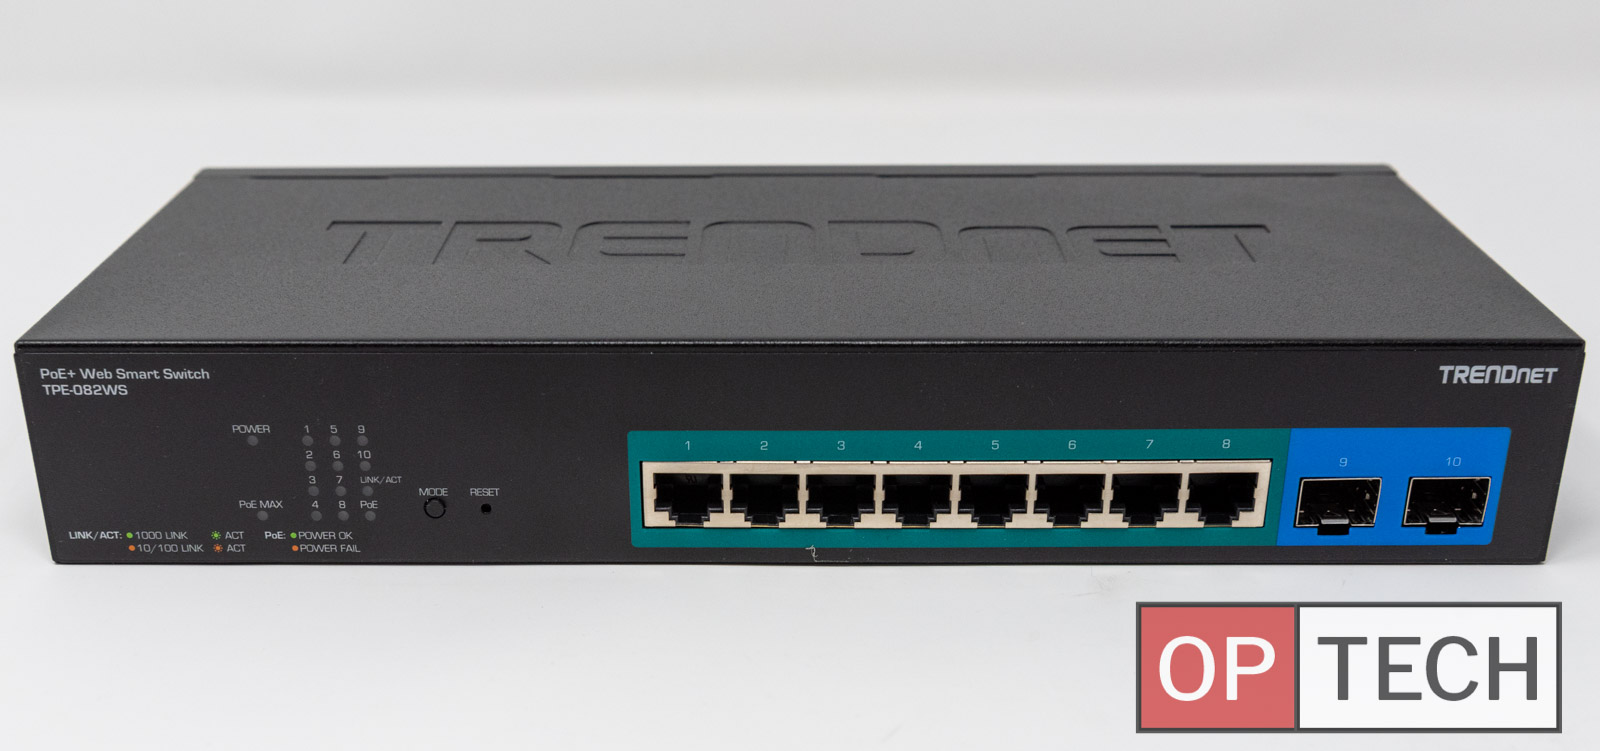 Frontale switch TRENDnet TPE 082WS